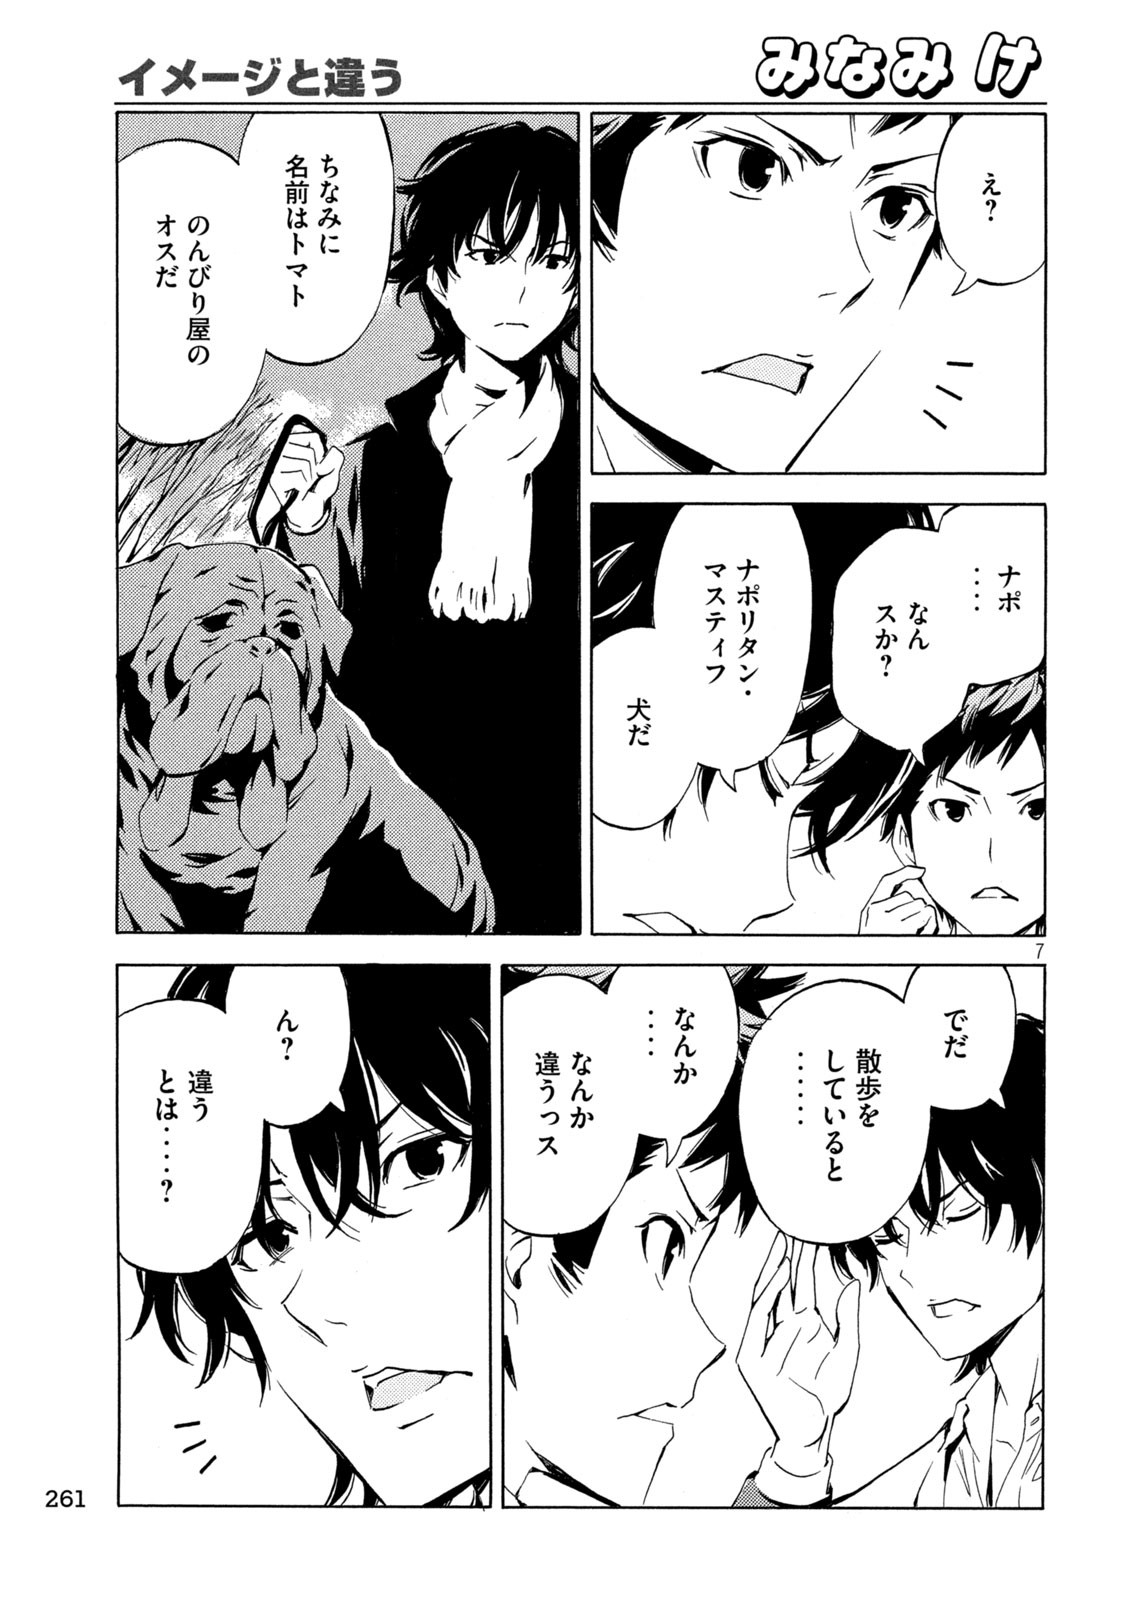 Minami-ke - Chapter 478 - Page 7